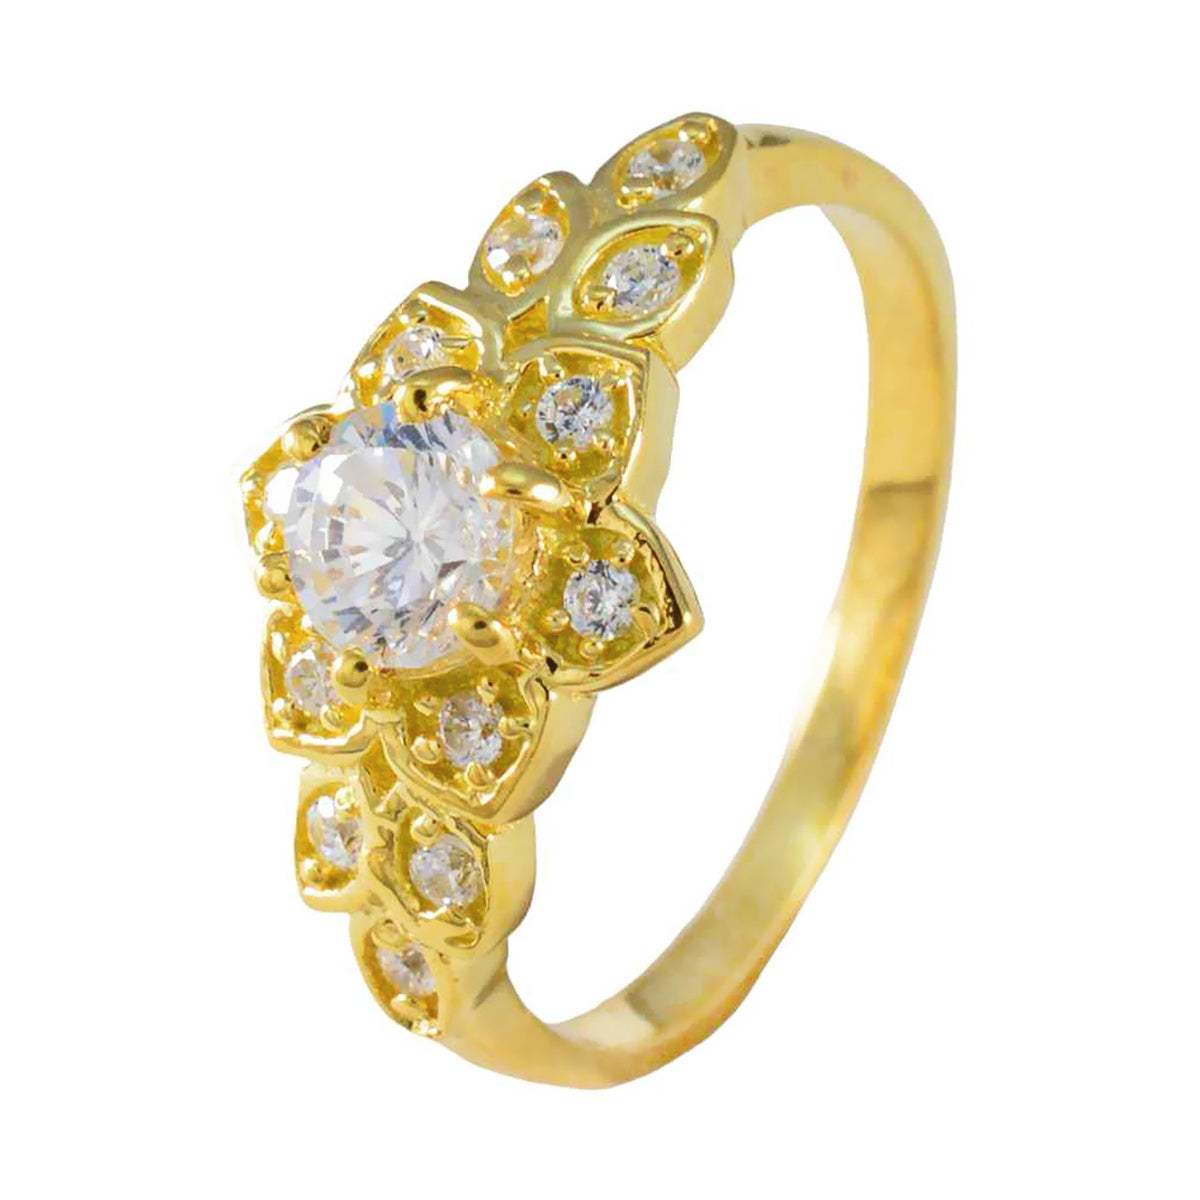 Riyo Desirable Silver Ring With Yellow Gold Plating White CZ Stone Round Shape Prong Setting Stylish Jewelry New Year Ring